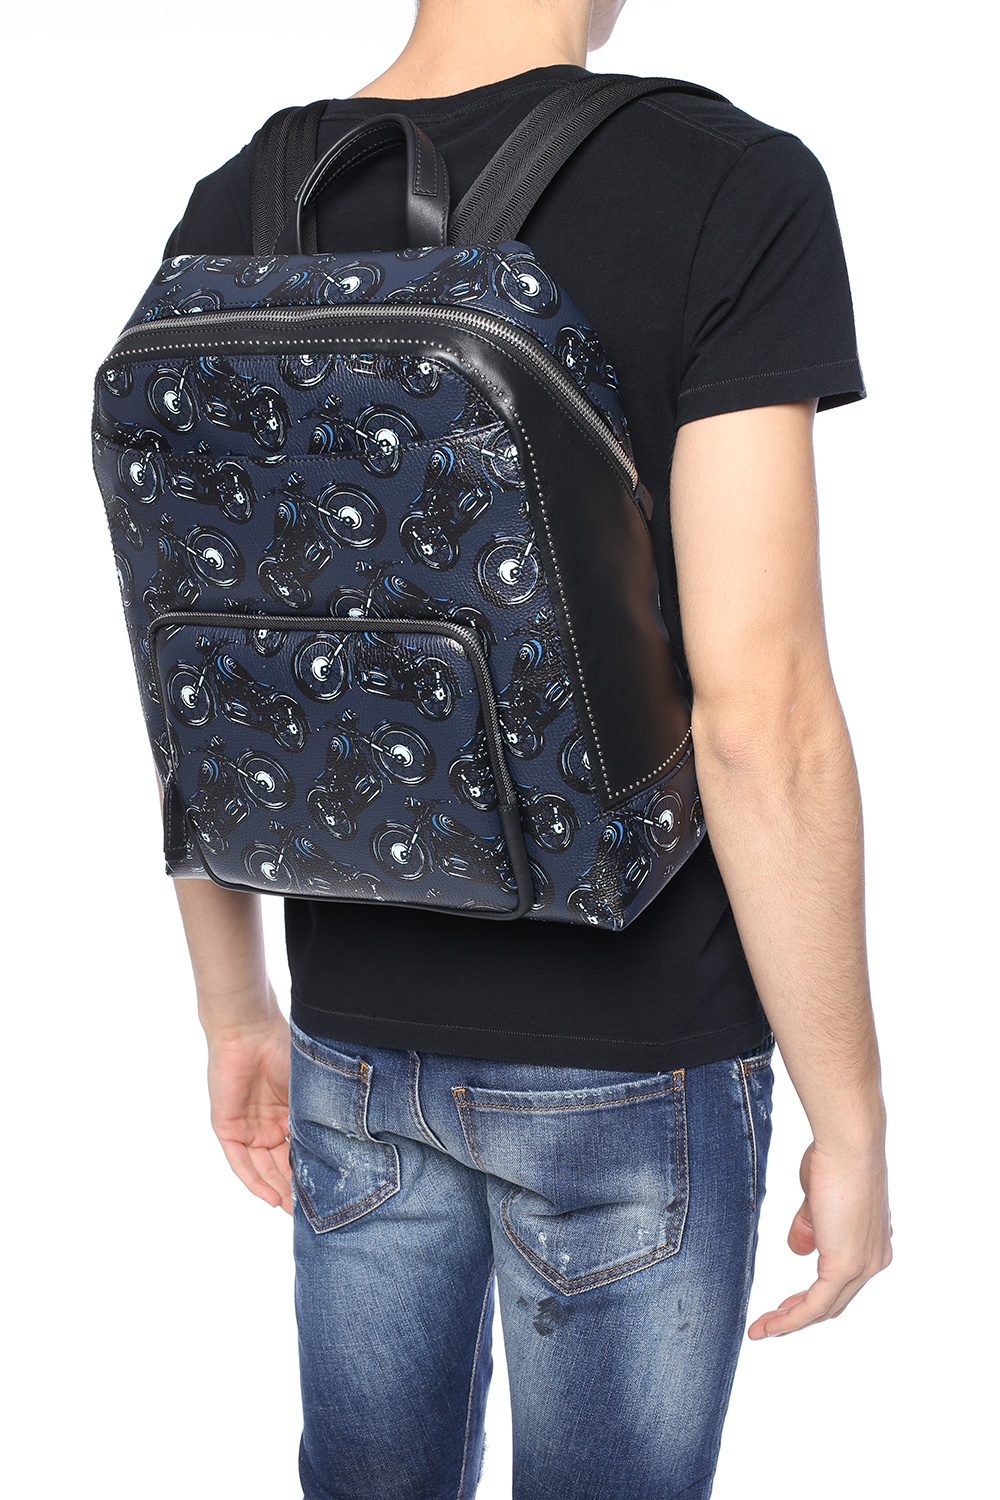 Blue Backpack with logo MCM - Vitkac TW